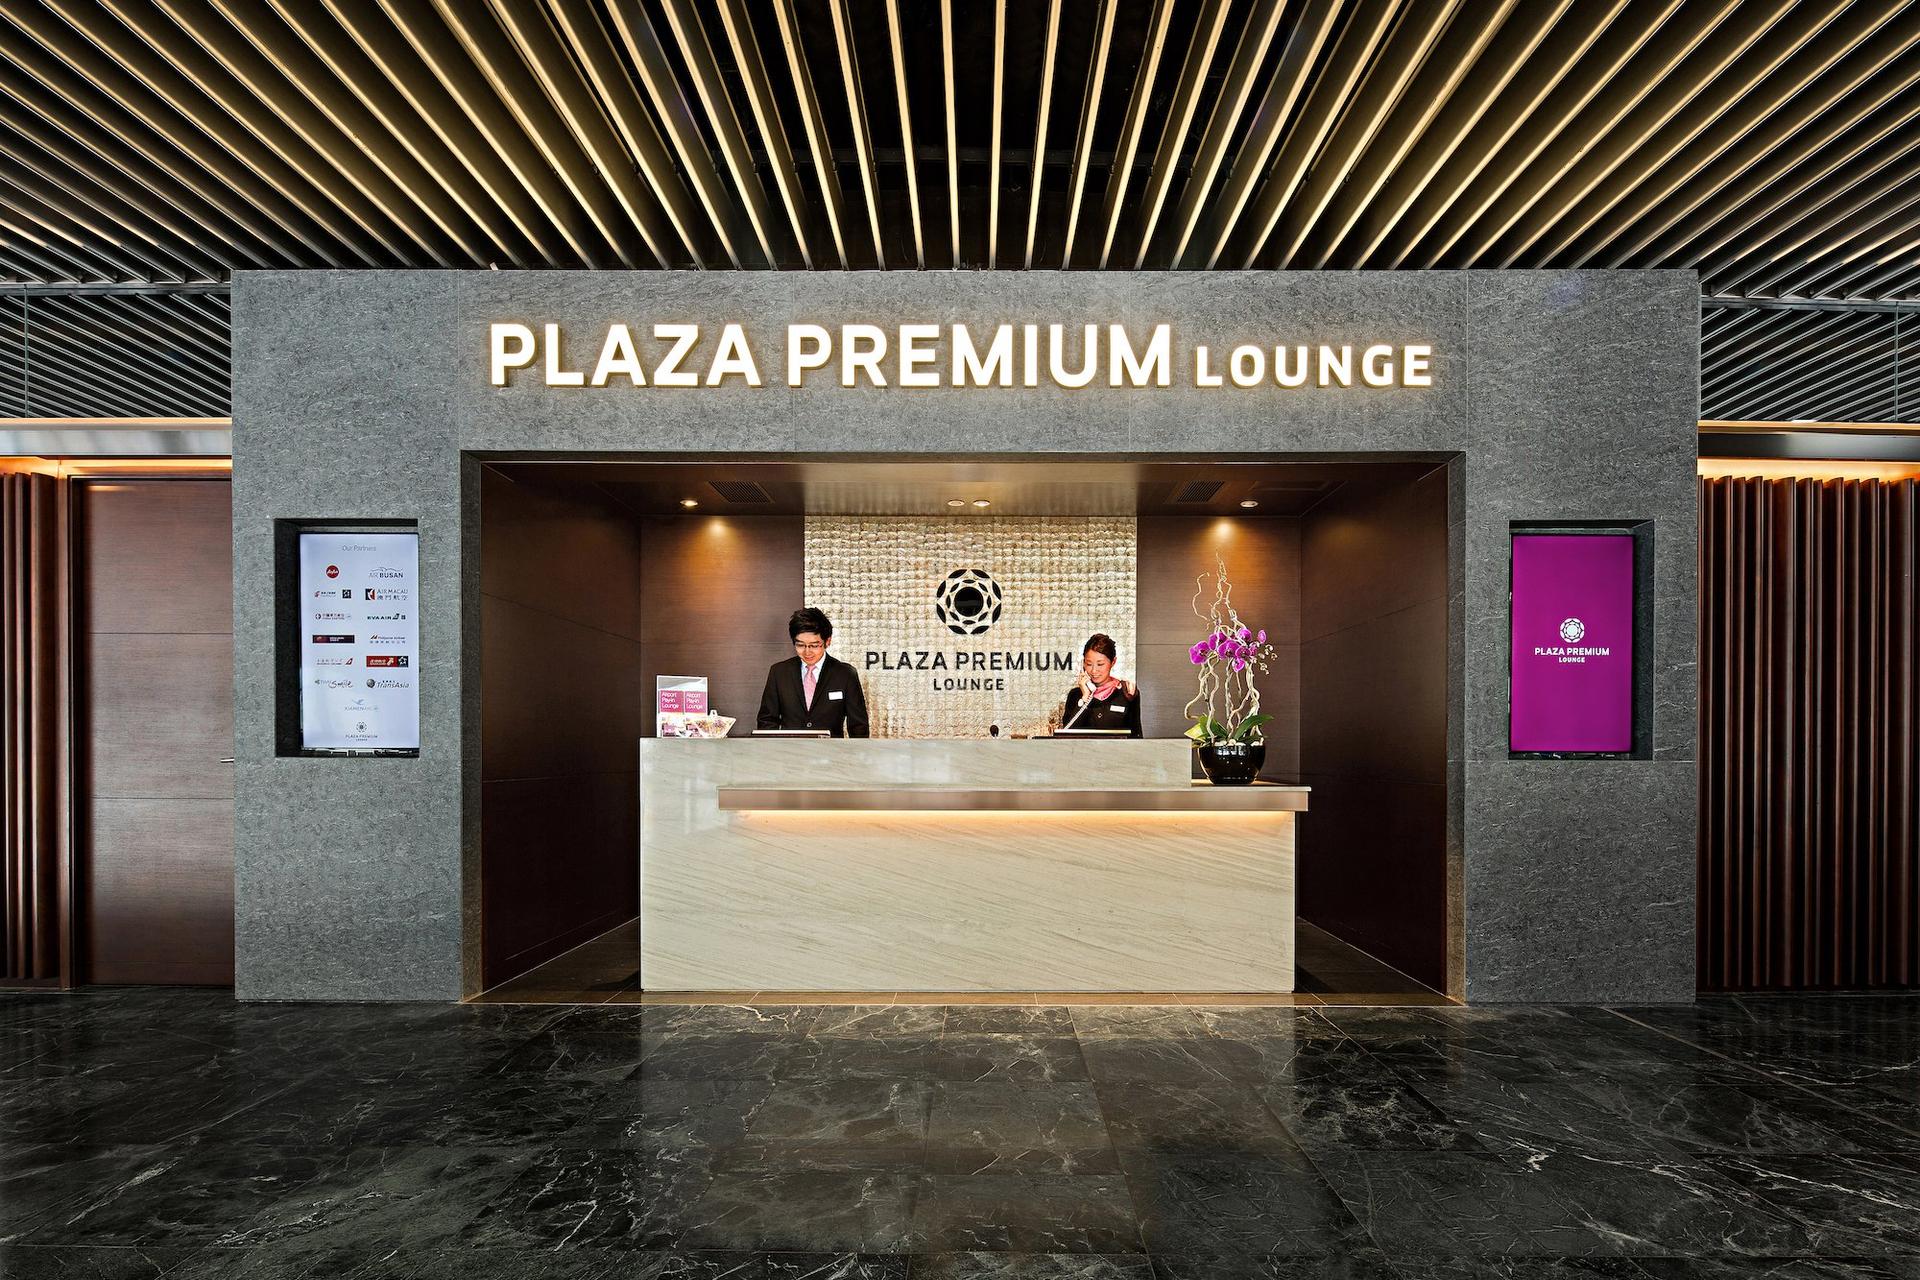 Plaza Premium Lounge image 34 of 37